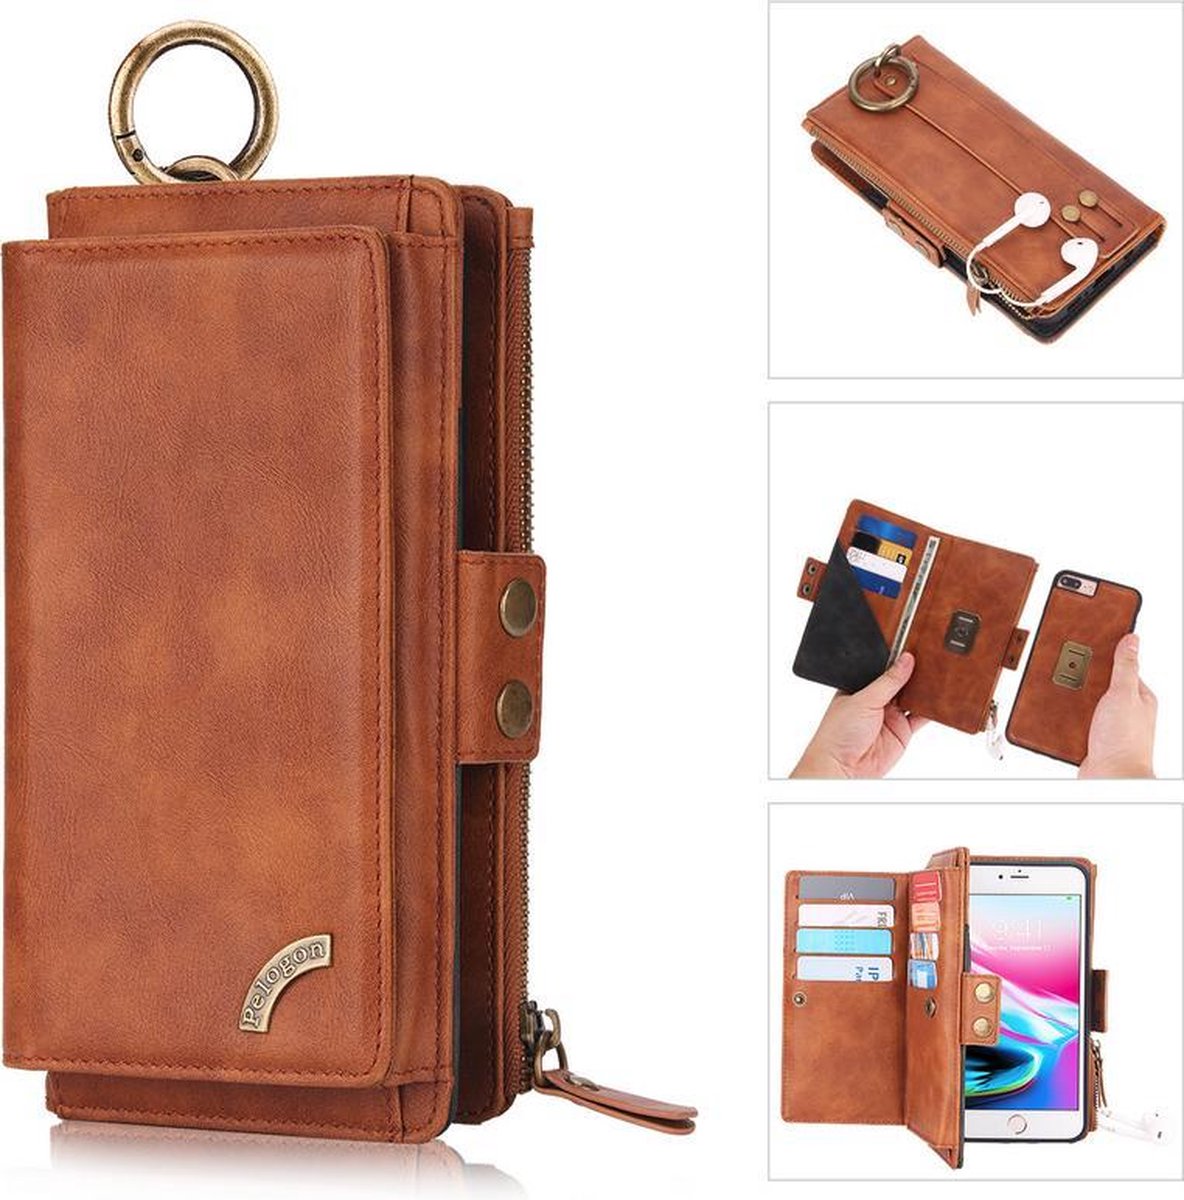 Samsung Galaxy S20 Pelogon Luxe/Hoesje/Portemonnee/Boekhoesje/Bookcase voor 12 pasjes bruikbaar bruin